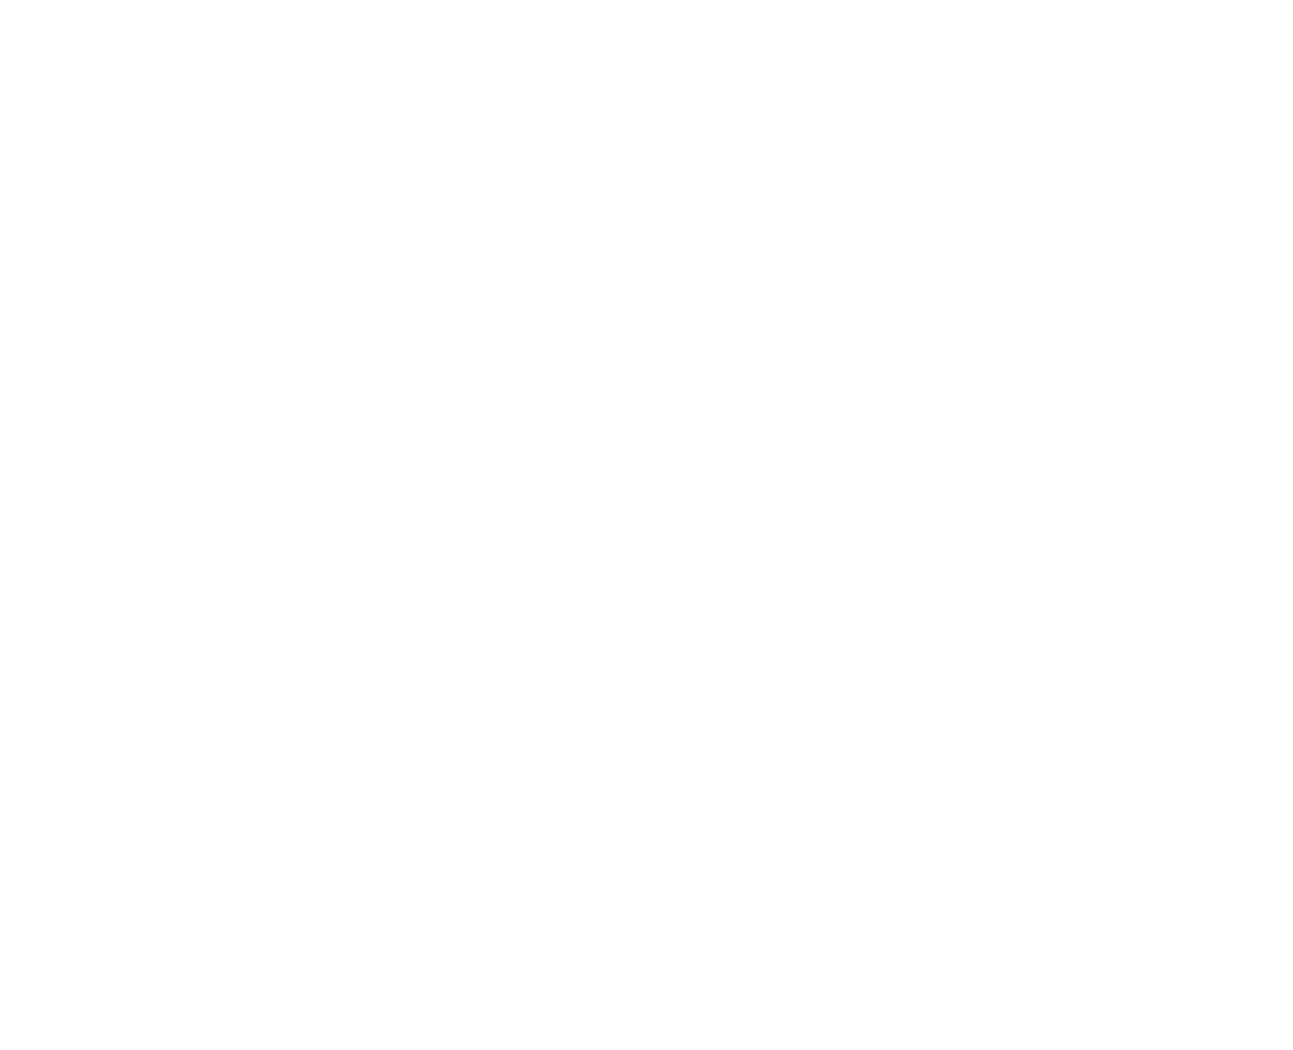 CHARLIE KNOTT FILMS